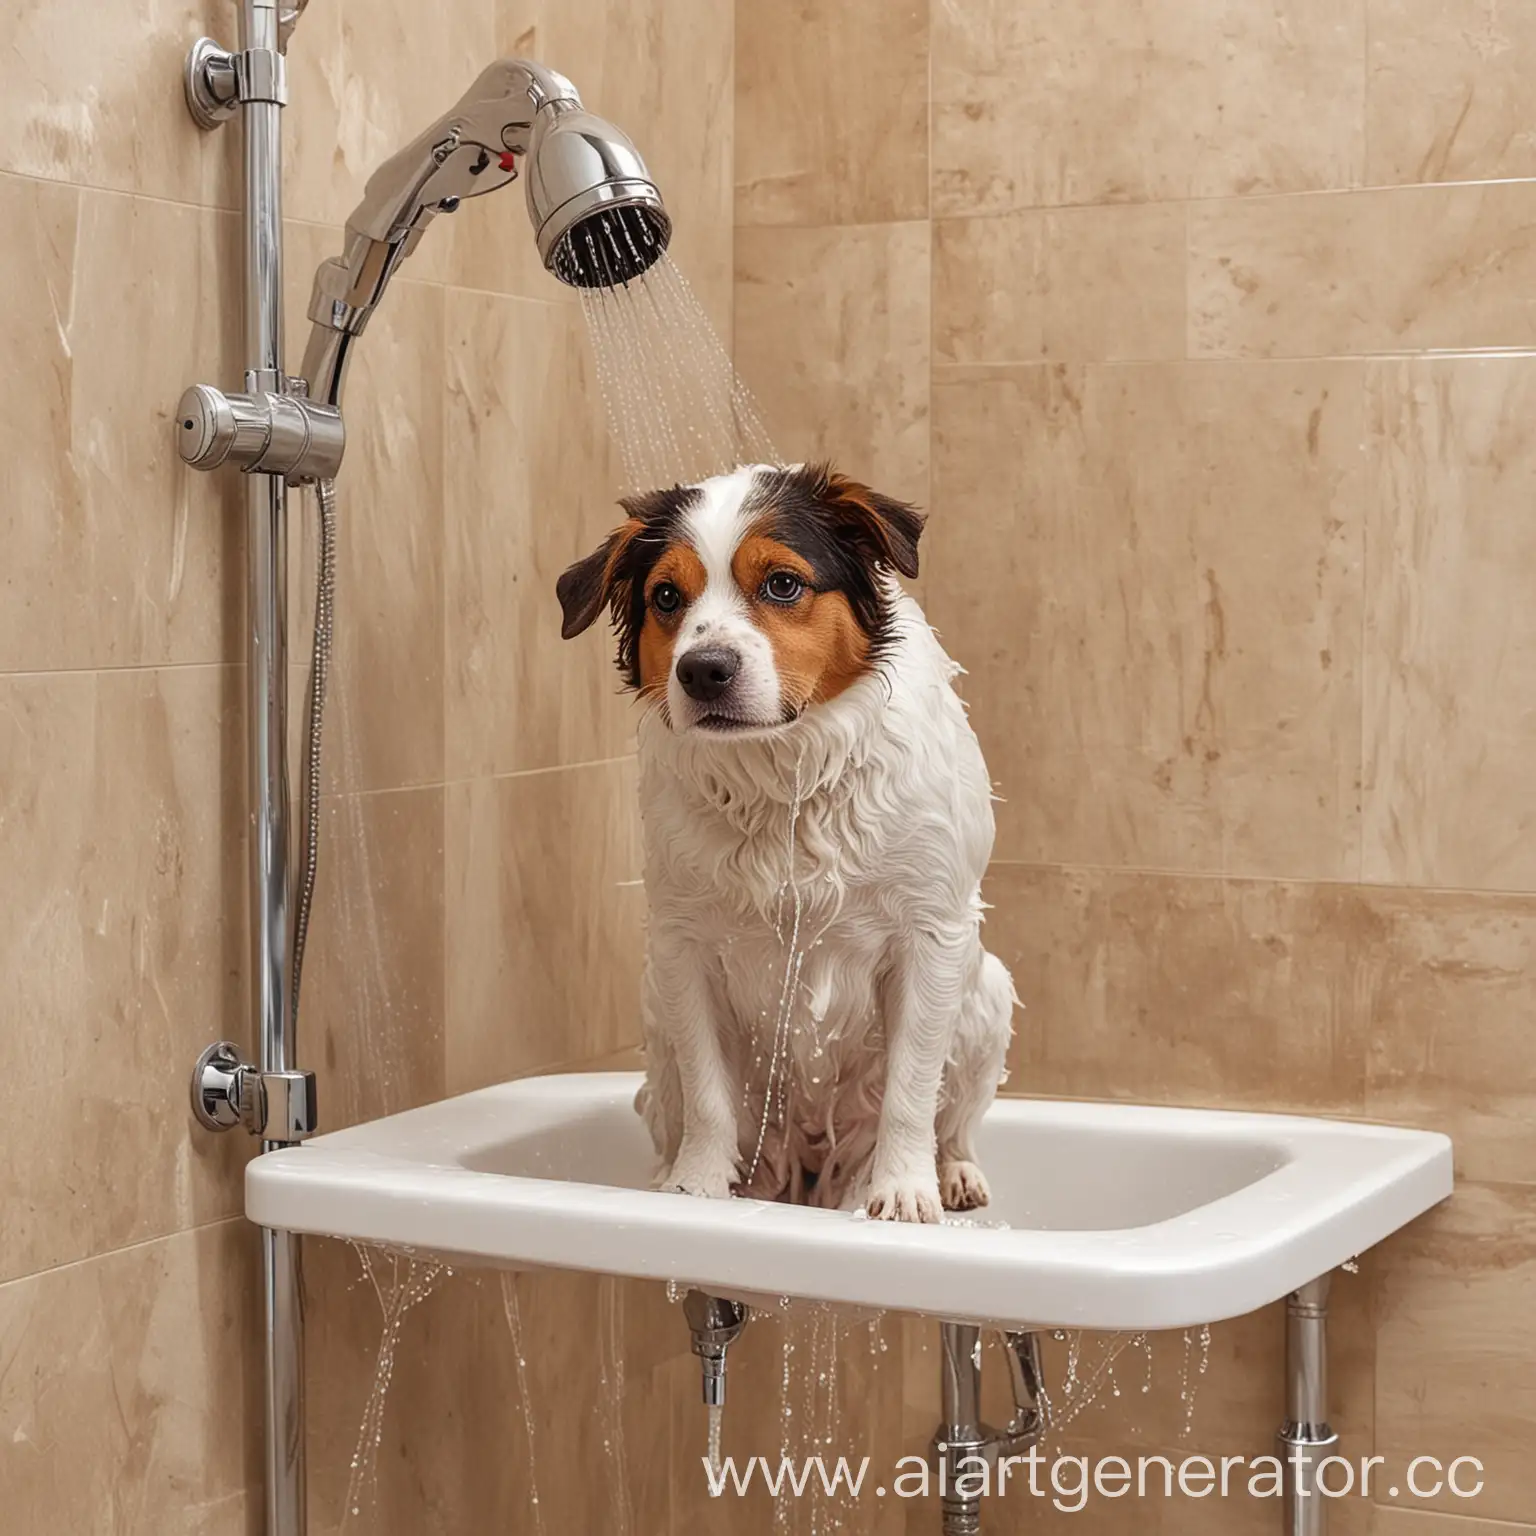 Adorable-Dog-Enjoying-a-Refreshing-Shower